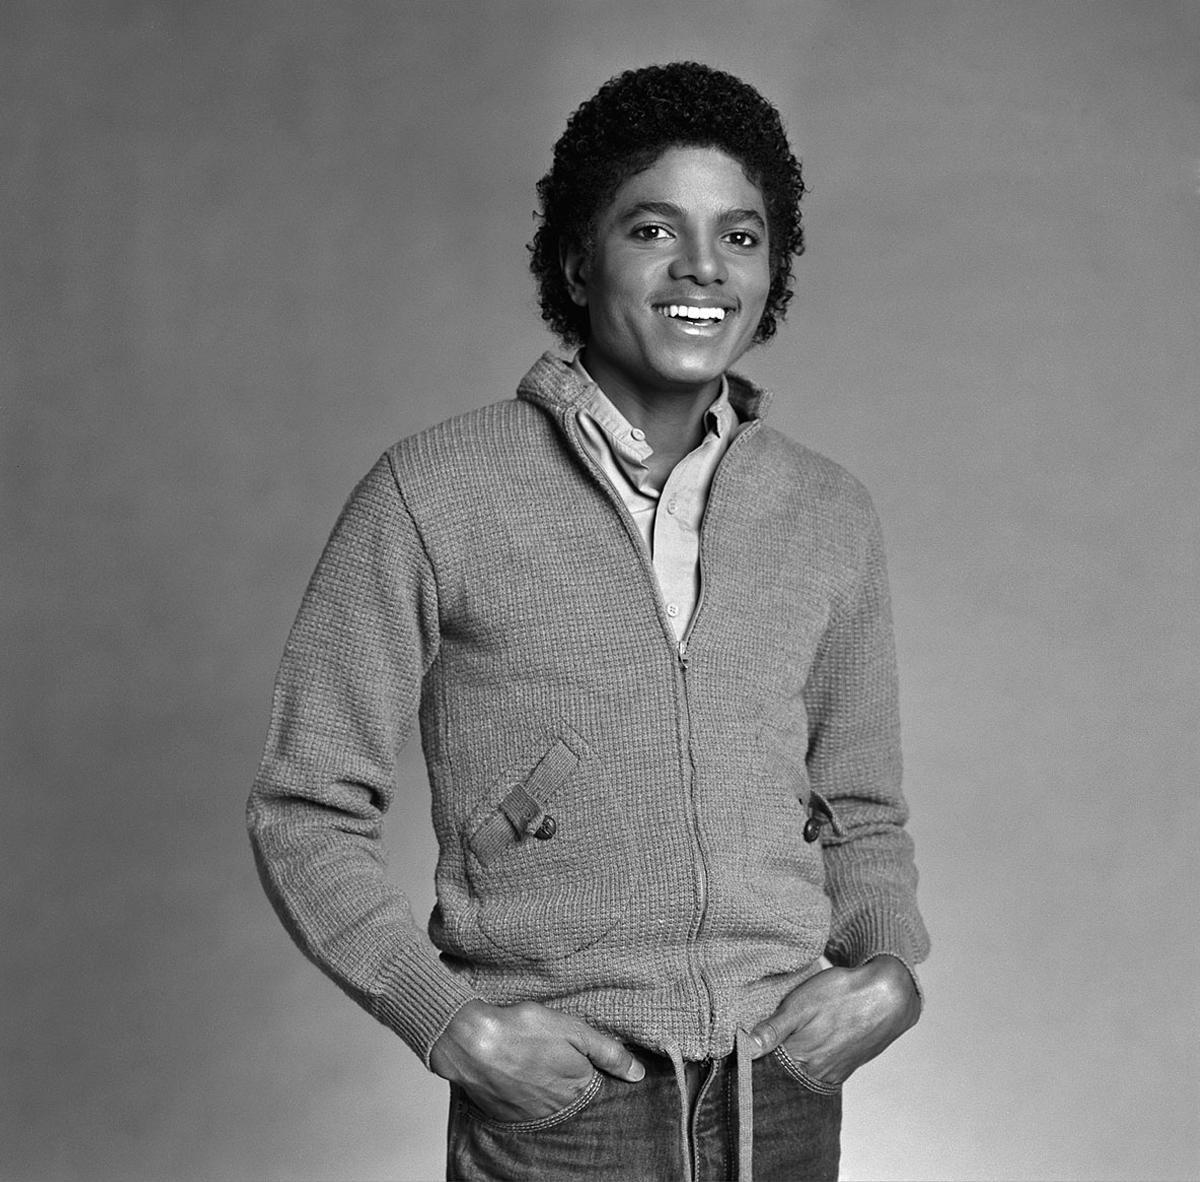 Michael-Jackson-michael-jackson-9049742-